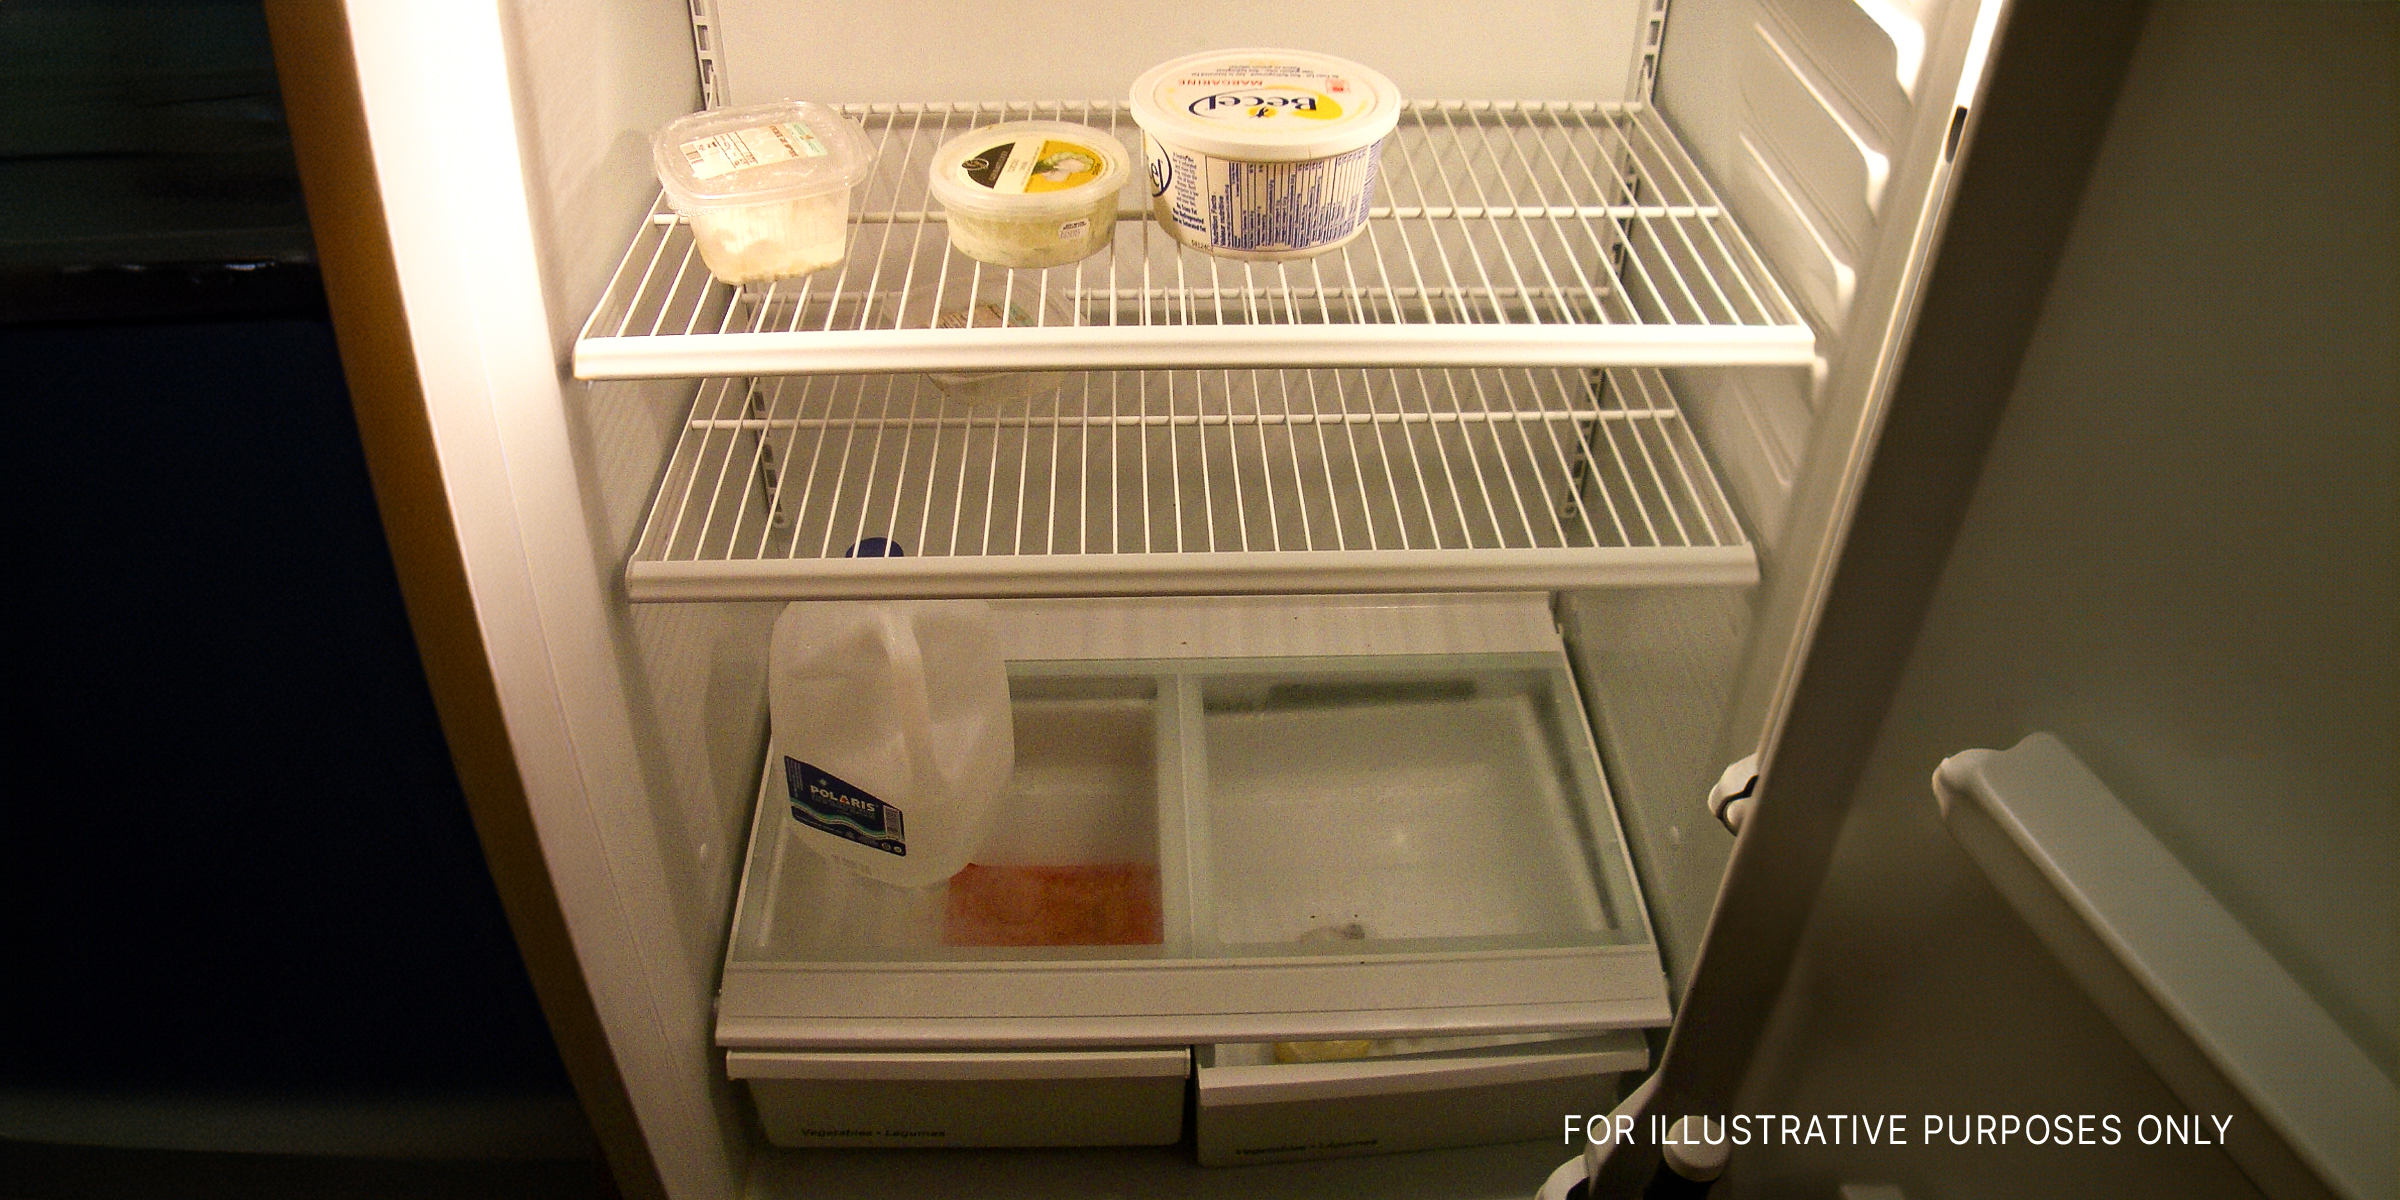 An empty refrigerator | Source: Flickr